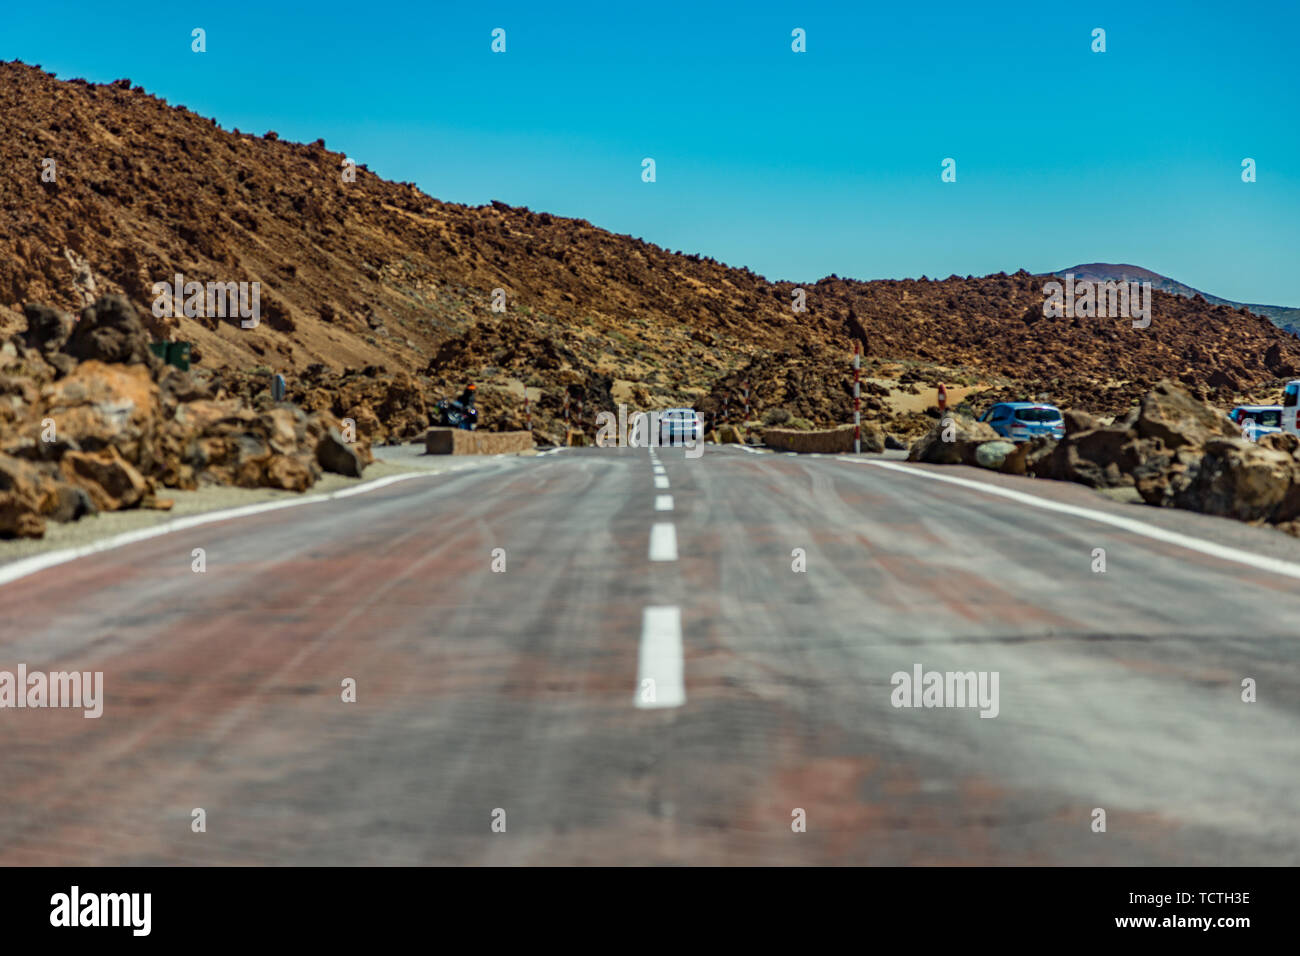 Nearest future. Asfalt road crossing Mars landscape. Mountains around volcano Teide. Bright blue sky. Teide National Park, Tenerife, Canary Islands, S Stock Photo